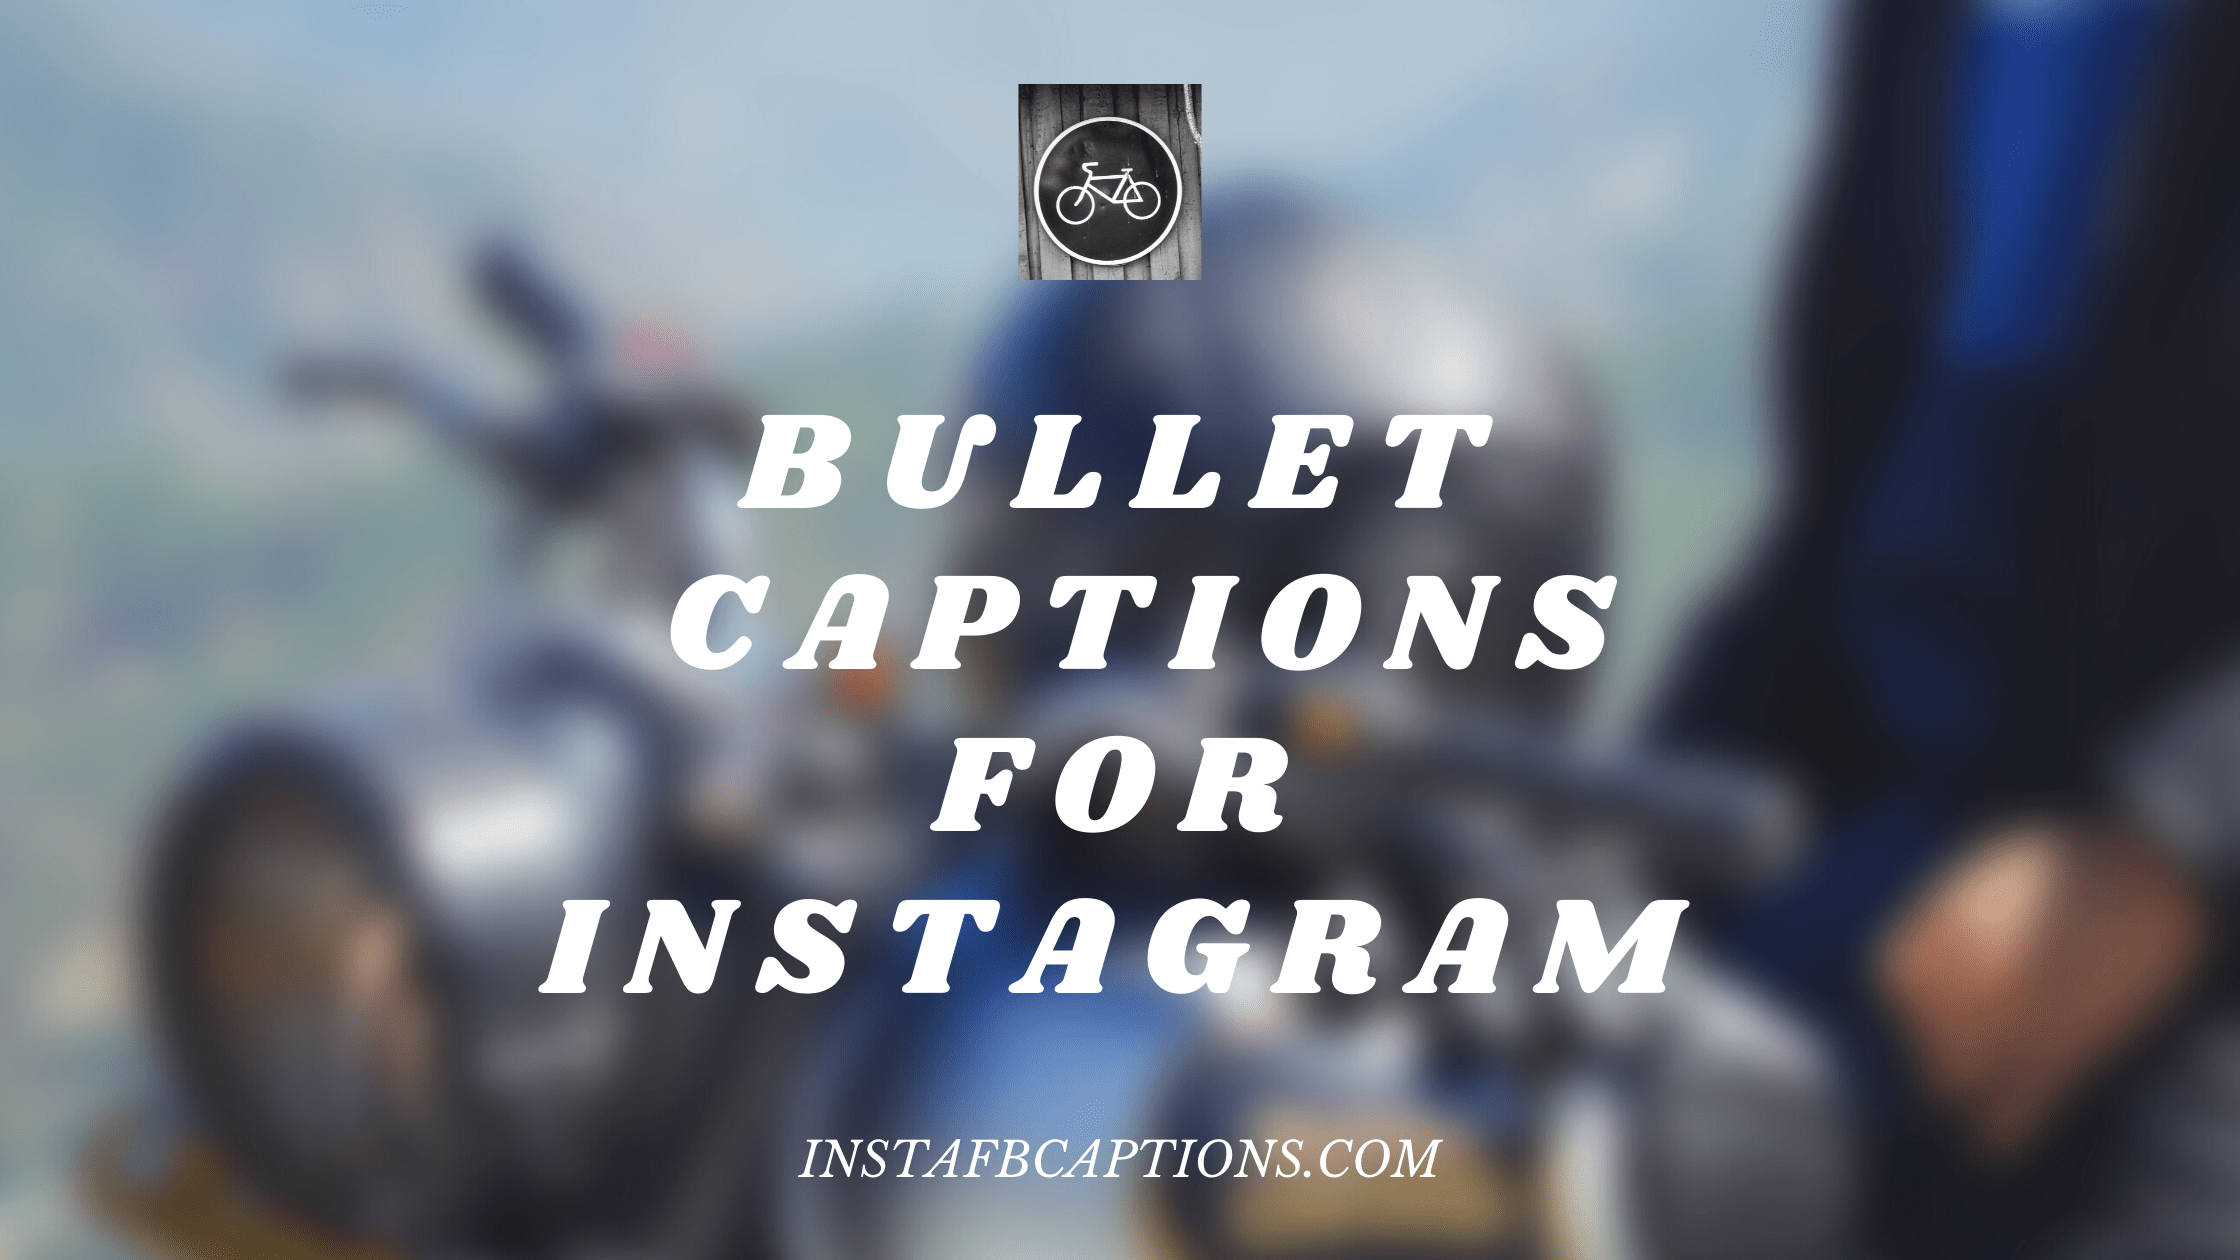 Bullet Captions For Instagram  - Bullet Captions for Instagram - Royal Enfield Instagram Captions for Bullet Lovers in 2023